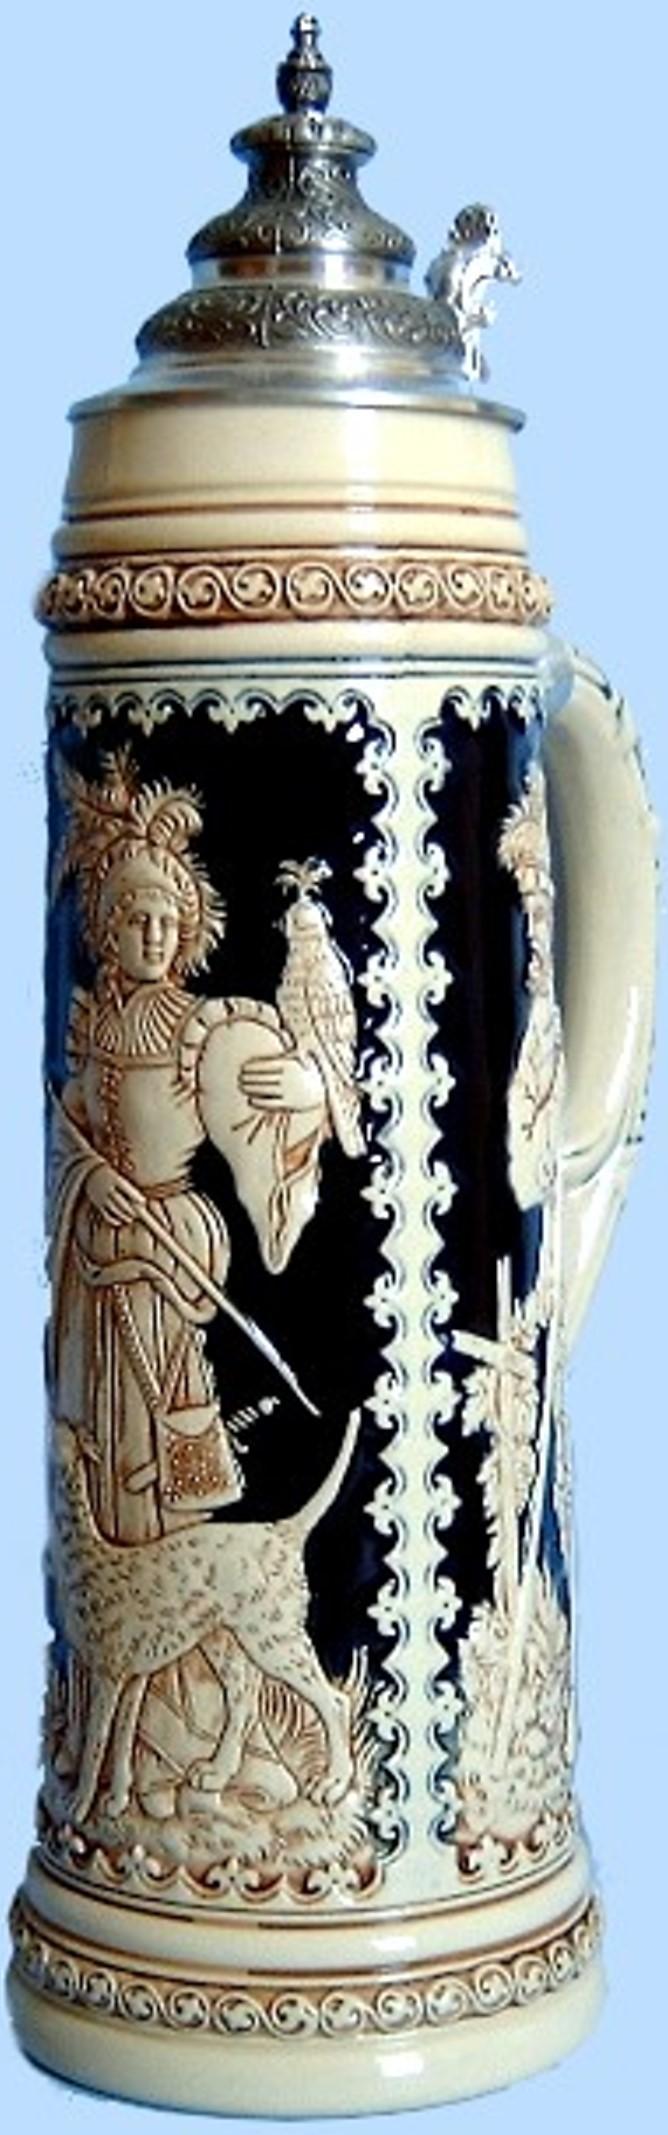 Foto Jarra Diana diosa de la caza, jarra suntuosa, réplica 1885, jarra 2 litros foto 705522